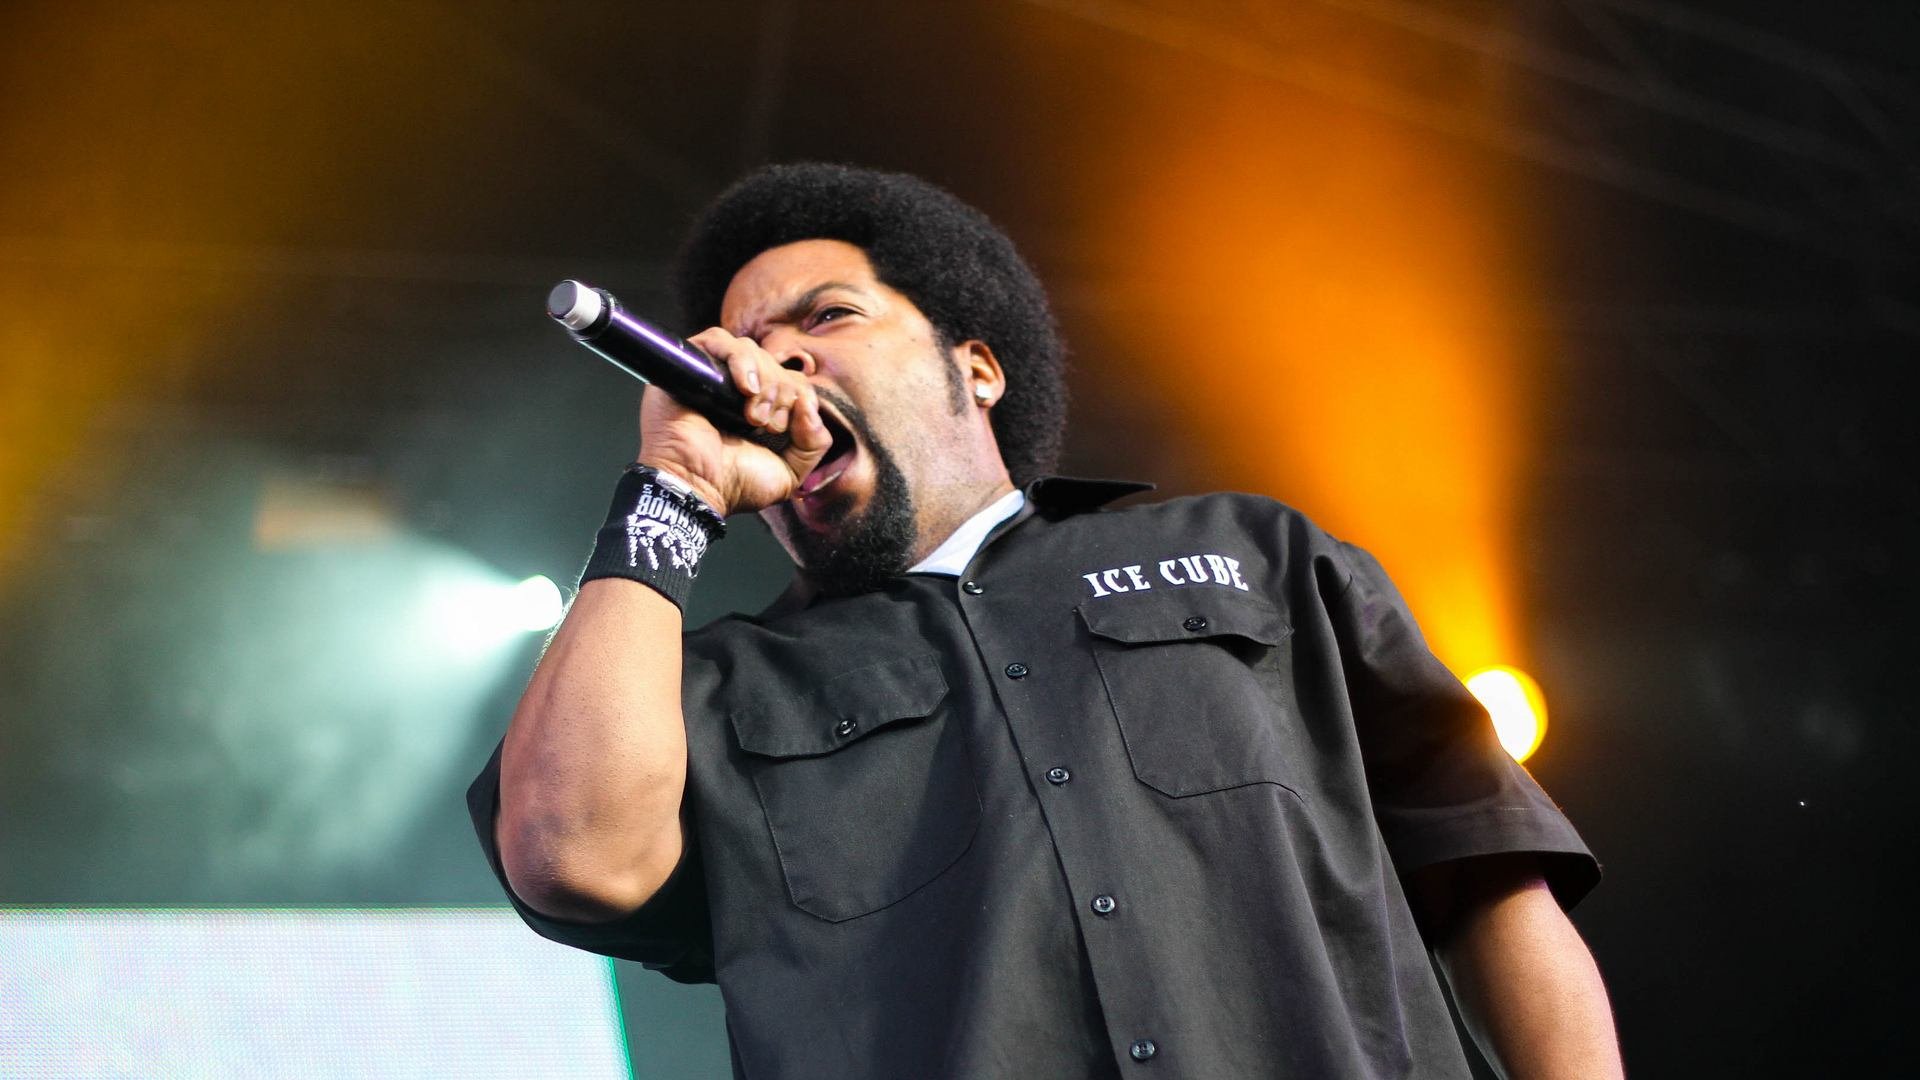 Ice Cube Wallpapers  Ice cube rapper, Rapper, Rap